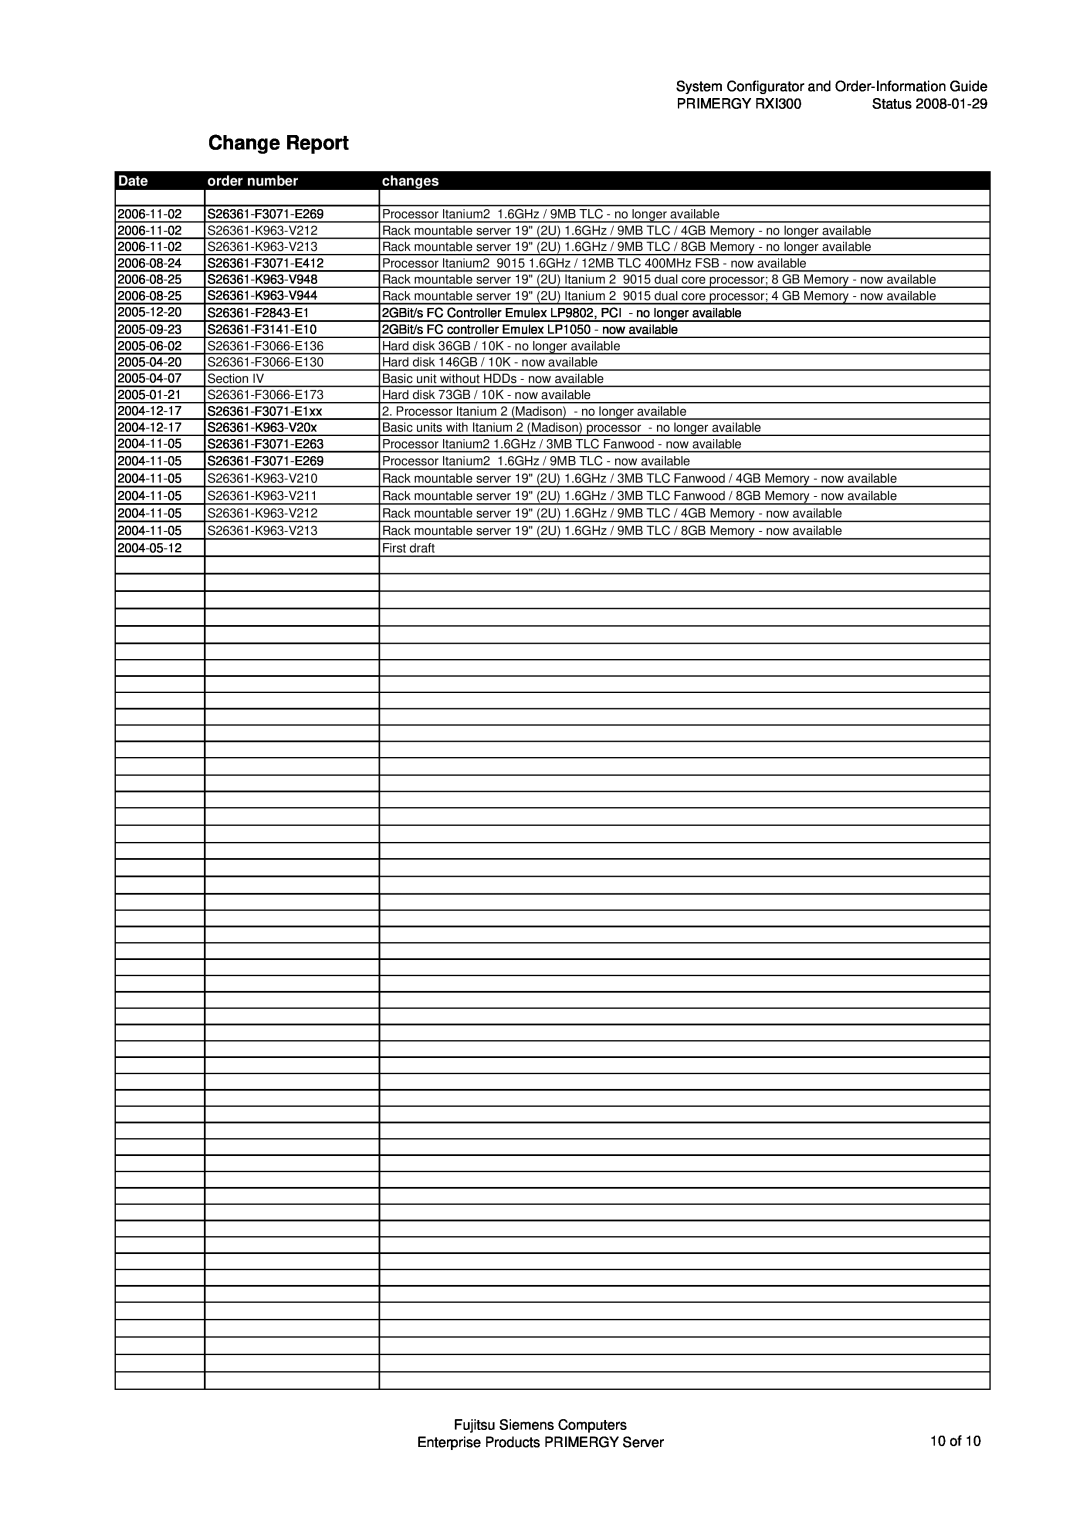 Fujitsu manual Change Report, PRIMERGY RXI300, Date, order number, changes, Fujitsu Siemens Computers 